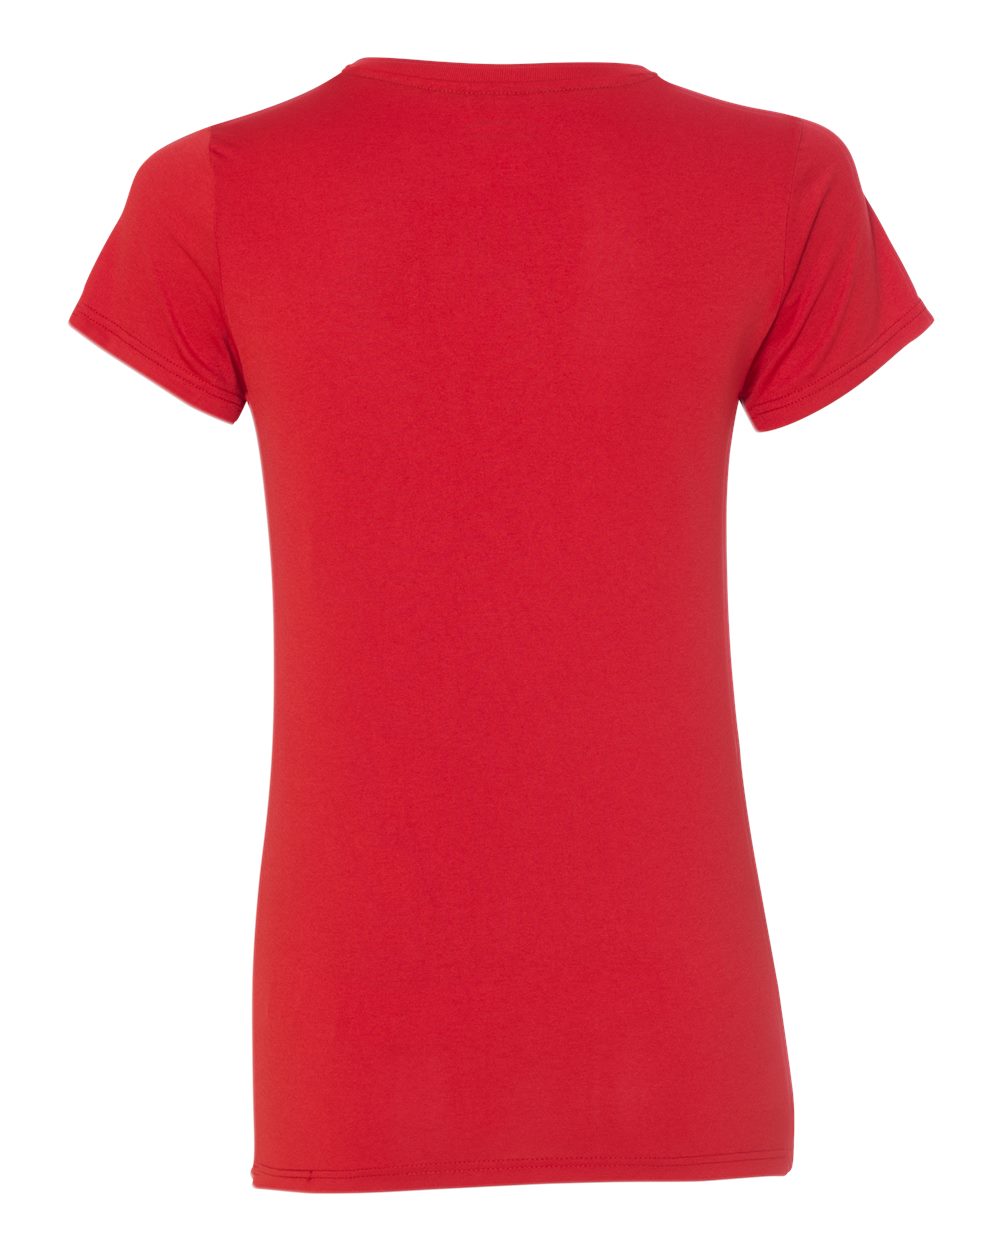 Gildan Performance® Tech Women's V-Neck T-Shirt 47V00L #color_Red